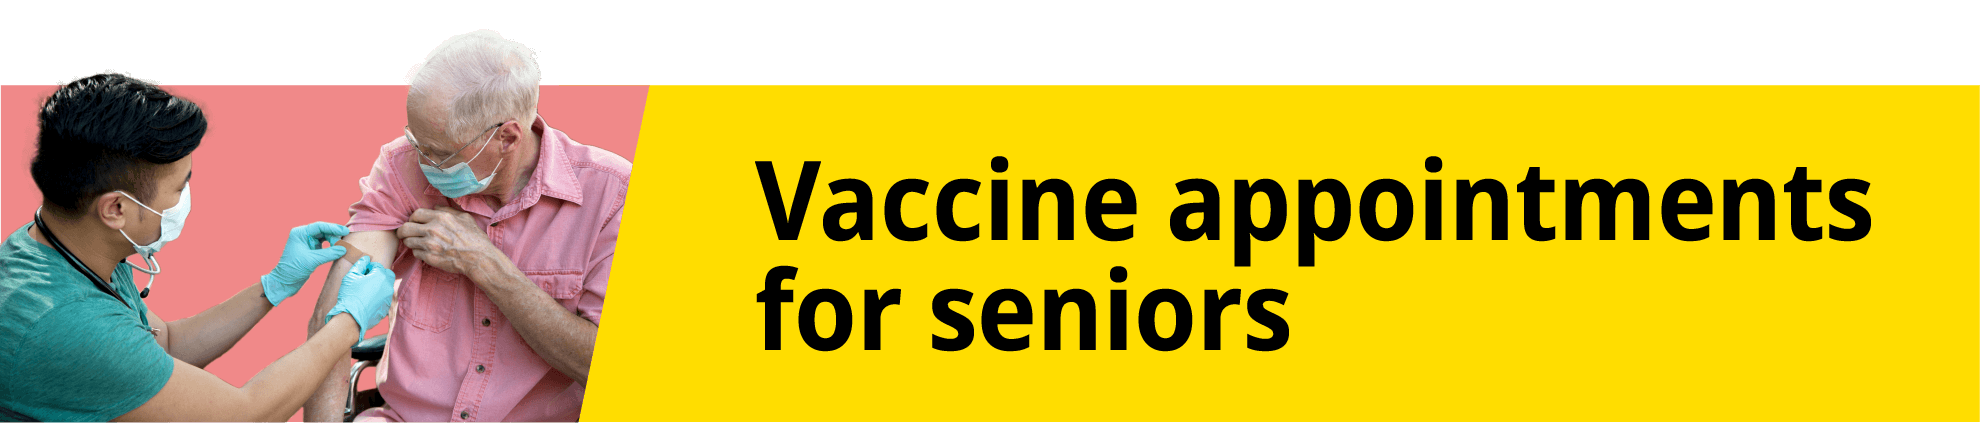 banner_seniors_immunization-16_2.png